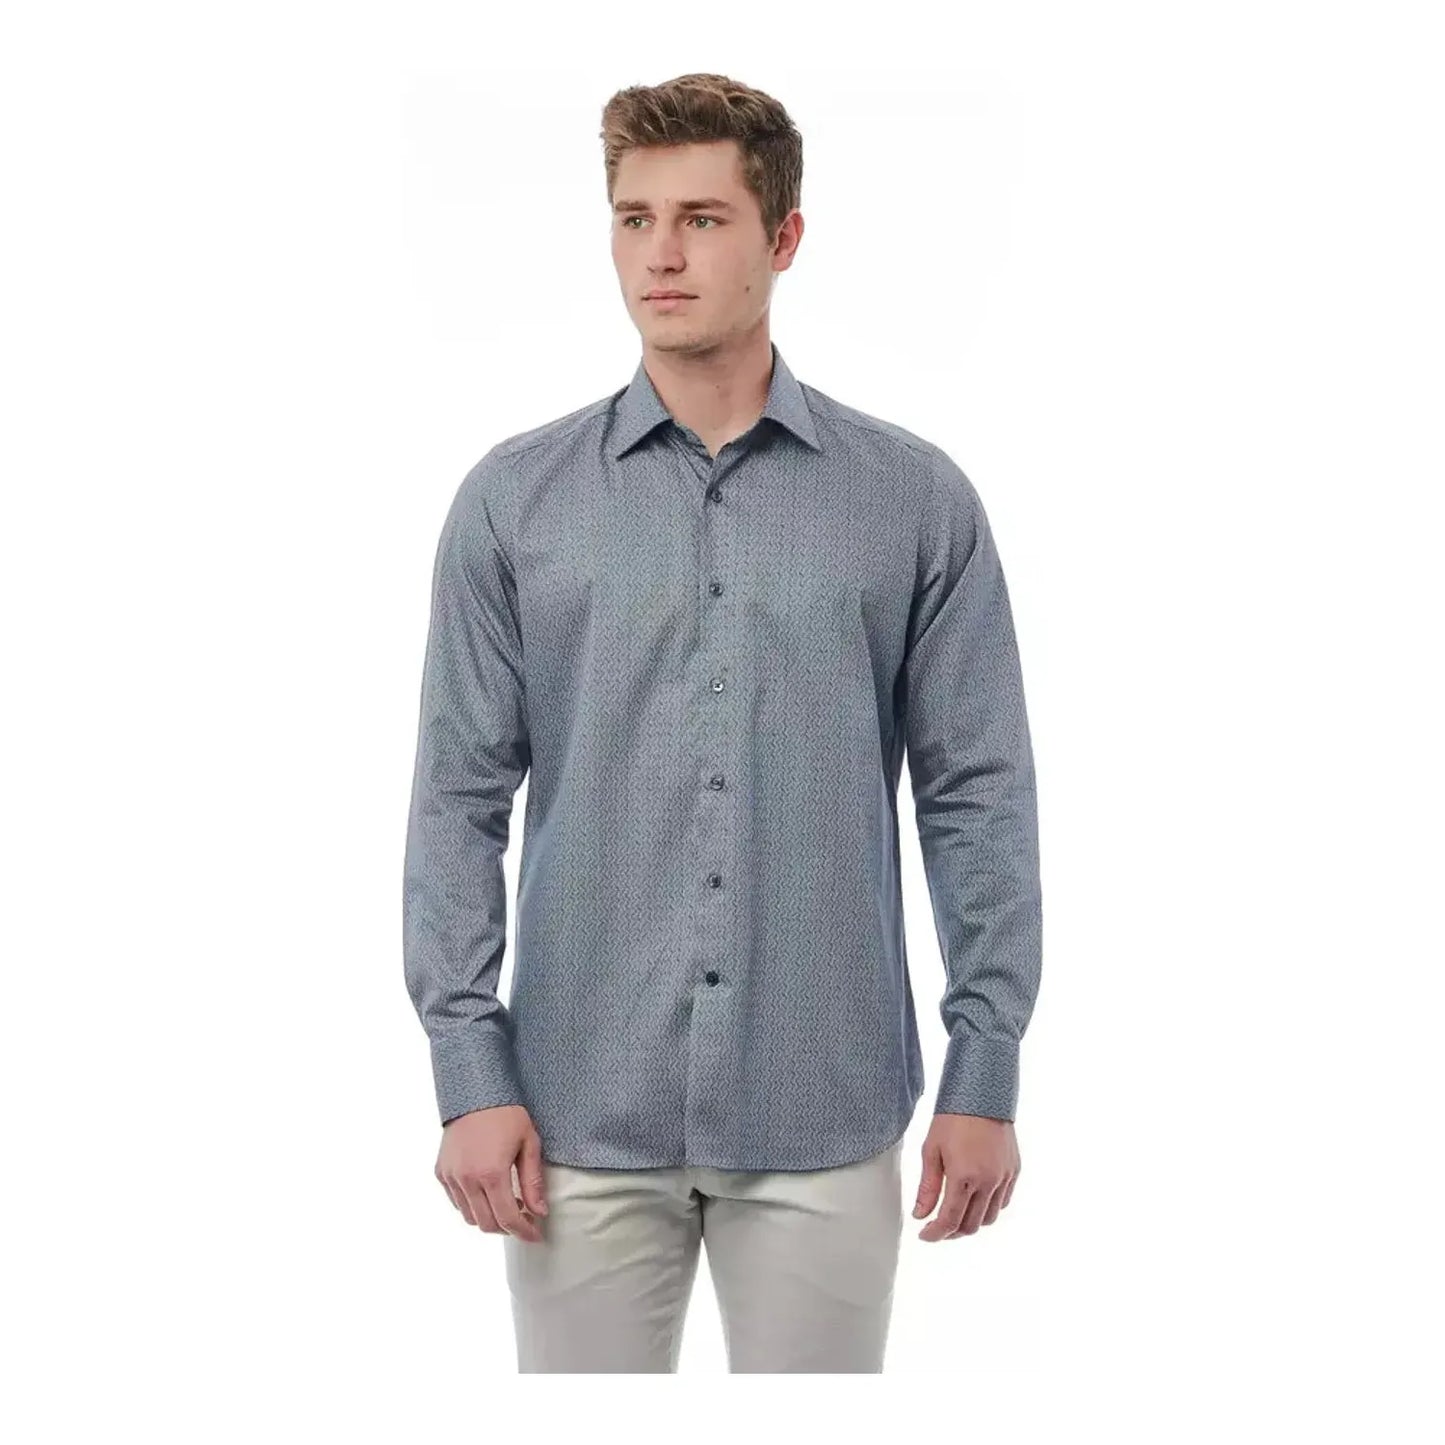 Bagutta Sleek Italian Collar Cotton Shirt MAN SHIRTS black-cotton-shirt-1